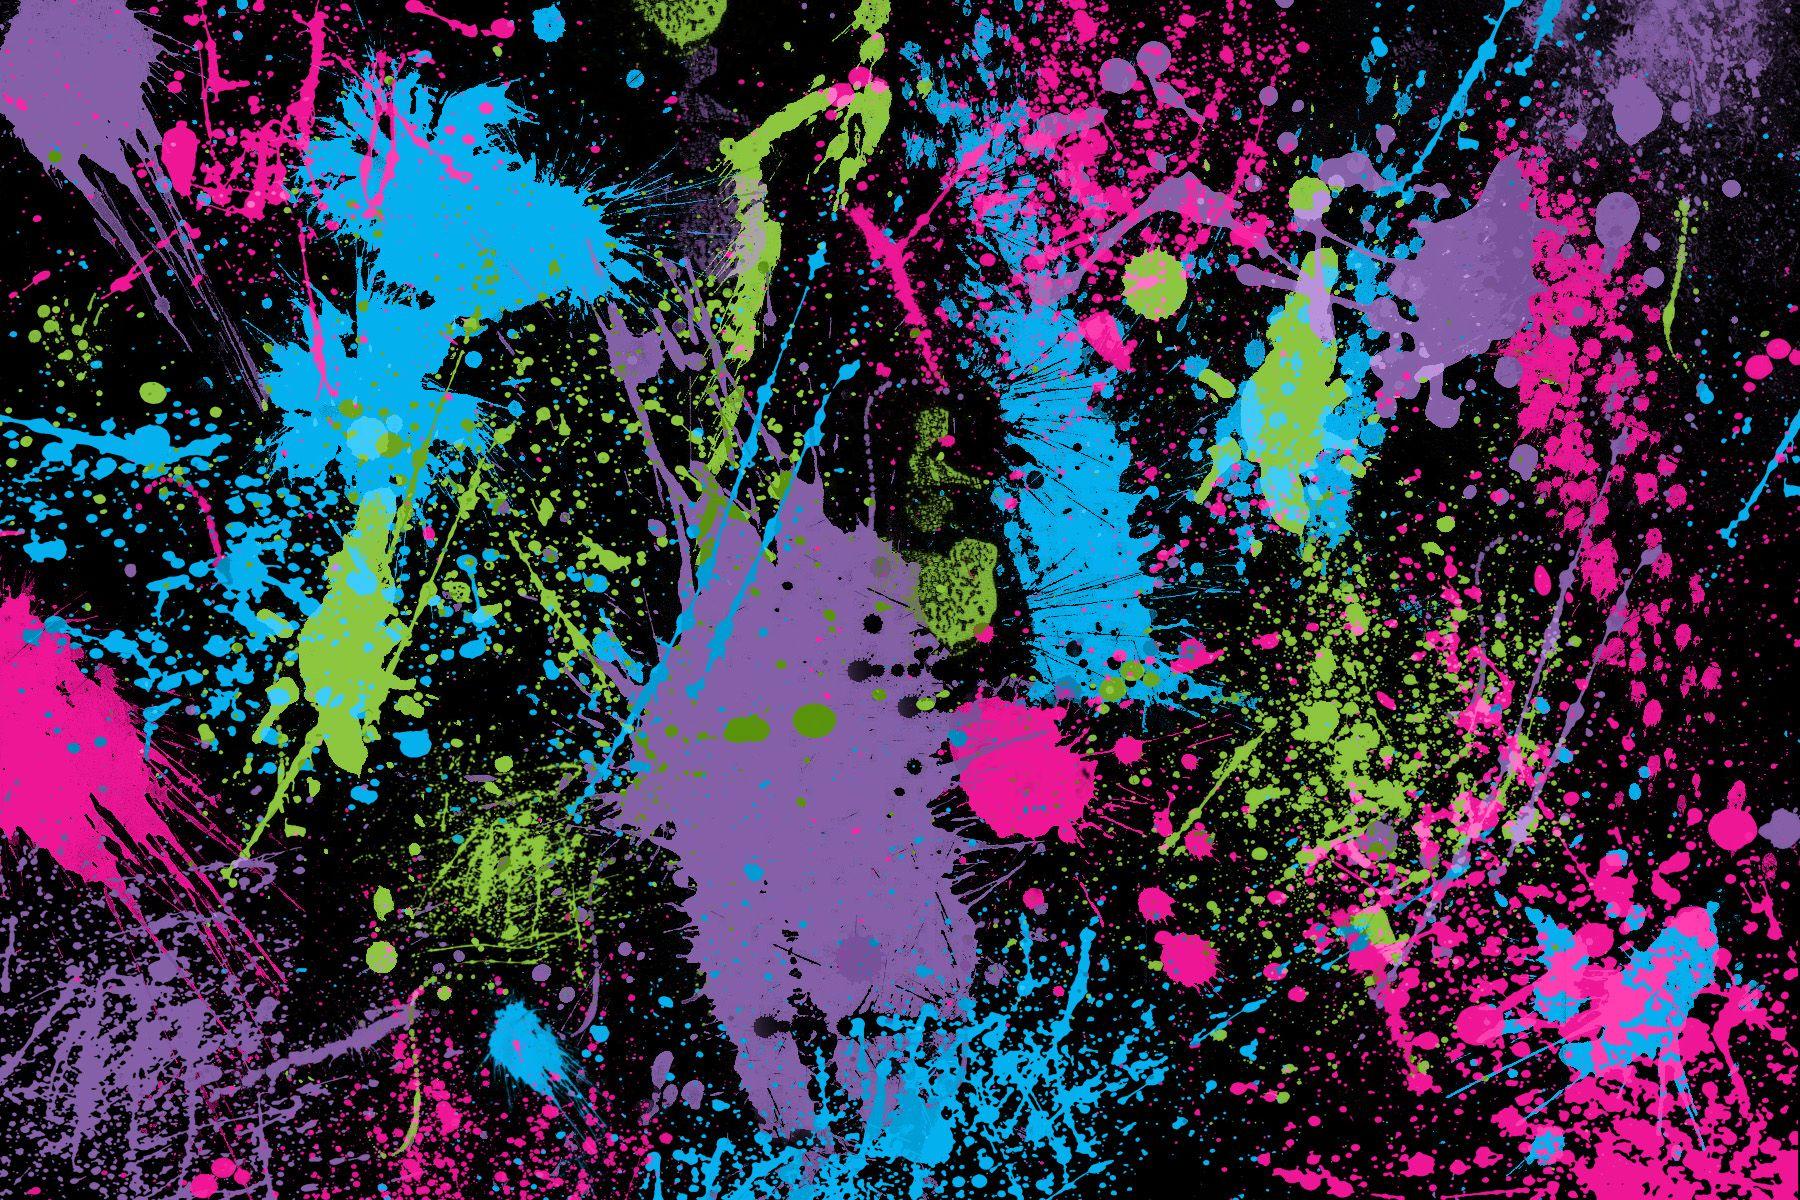 HomeNeon Paint Splatter Background. Paint splatter background, Splatter background, Neon painting